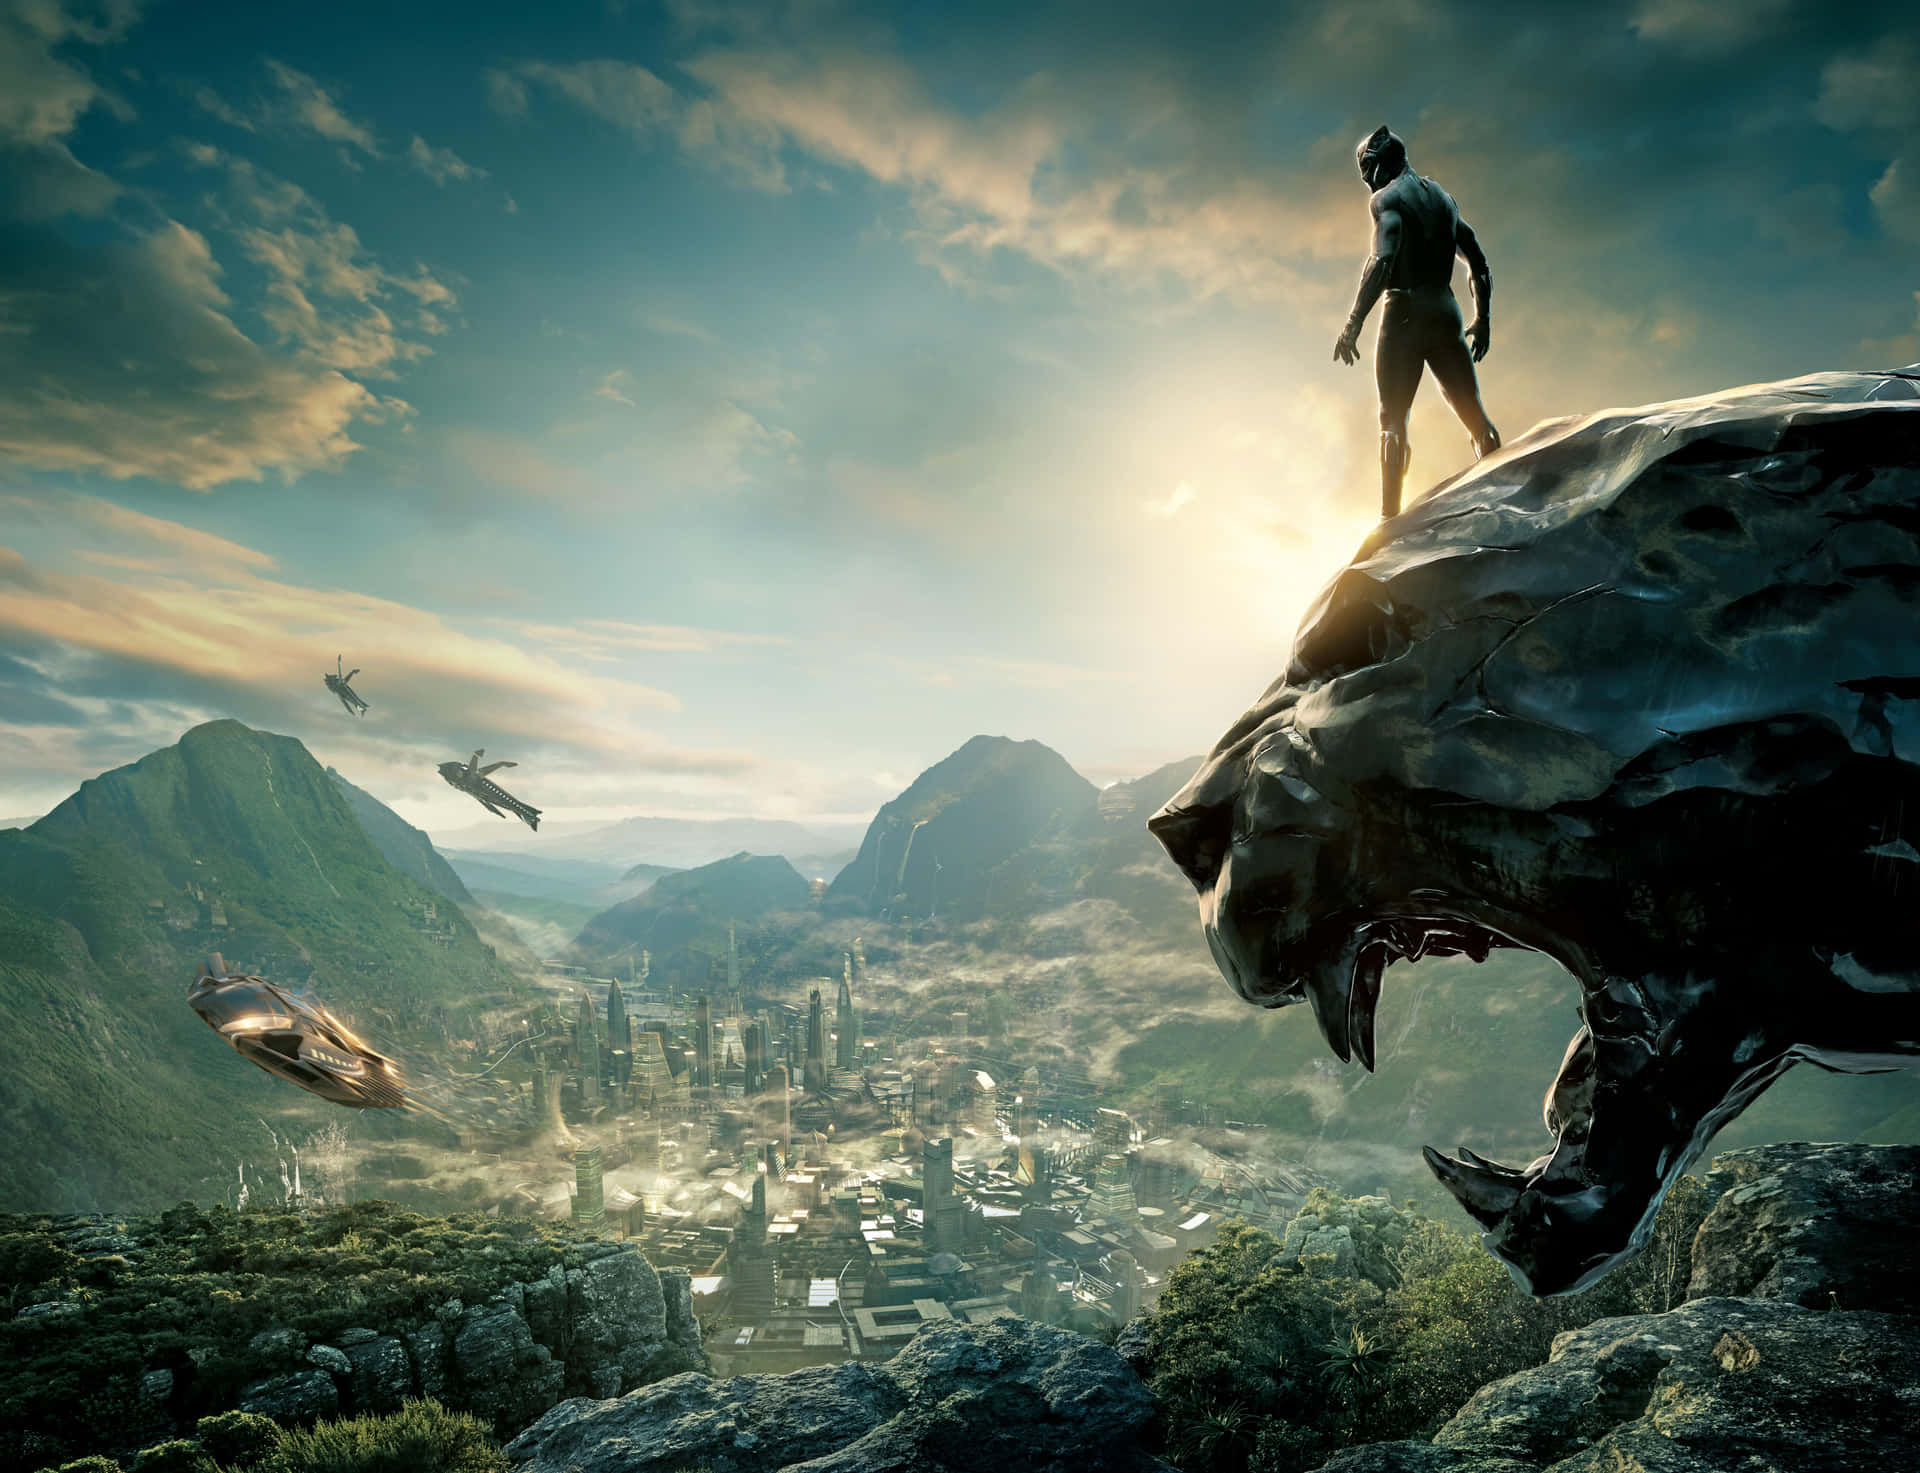 Magical Black Panther Landscape Wallpaper